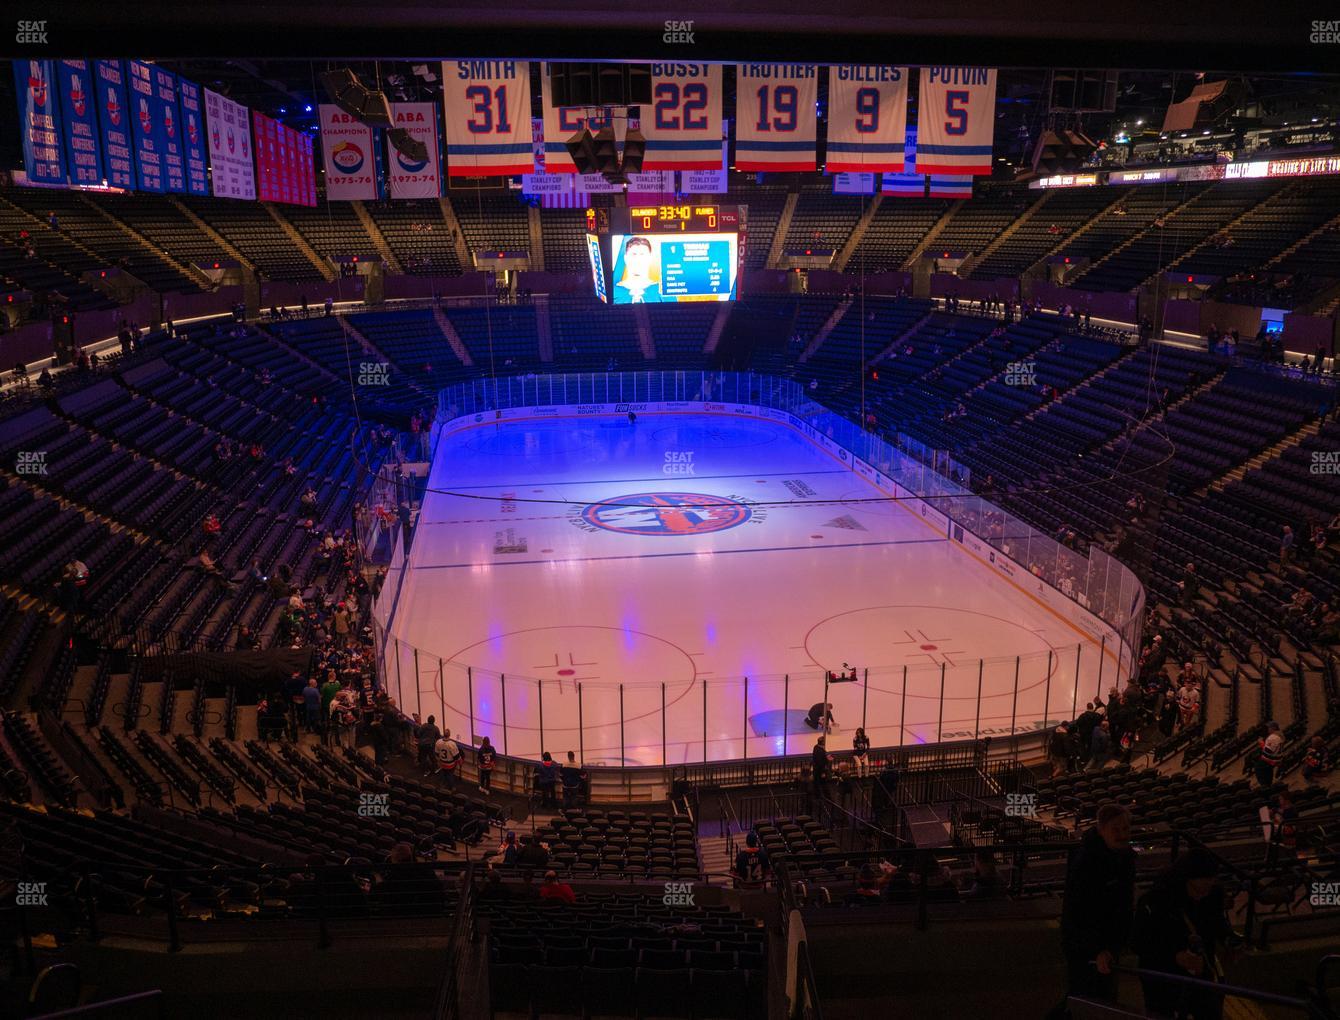 New York Islanders Nassau Coliseum Seating Chart